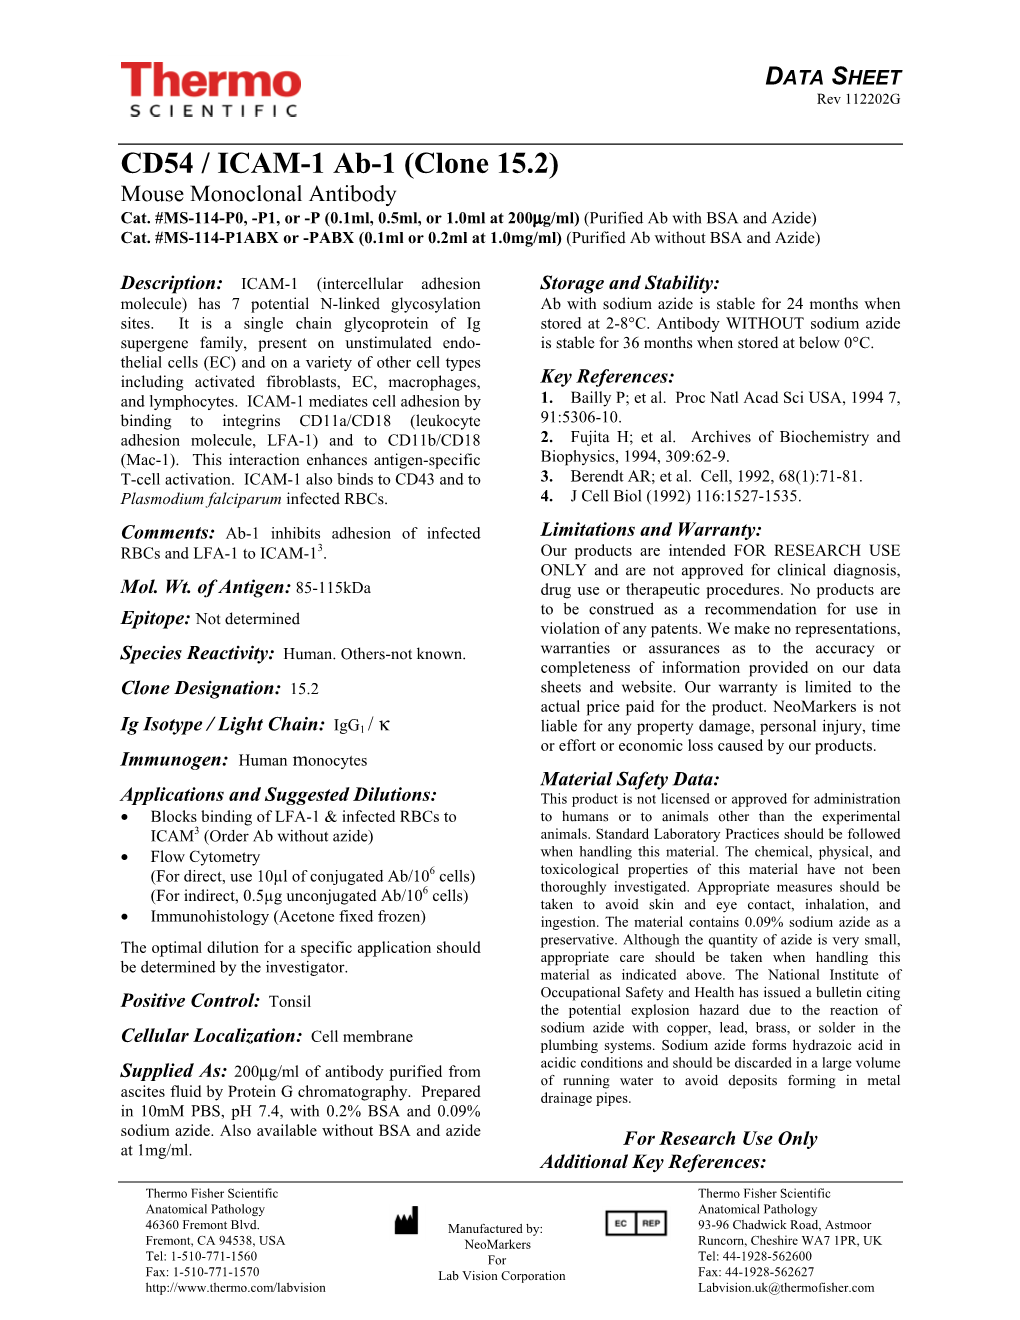 CD54/ICAM-1 Ab-1, Mouse Monoclonal Antibody